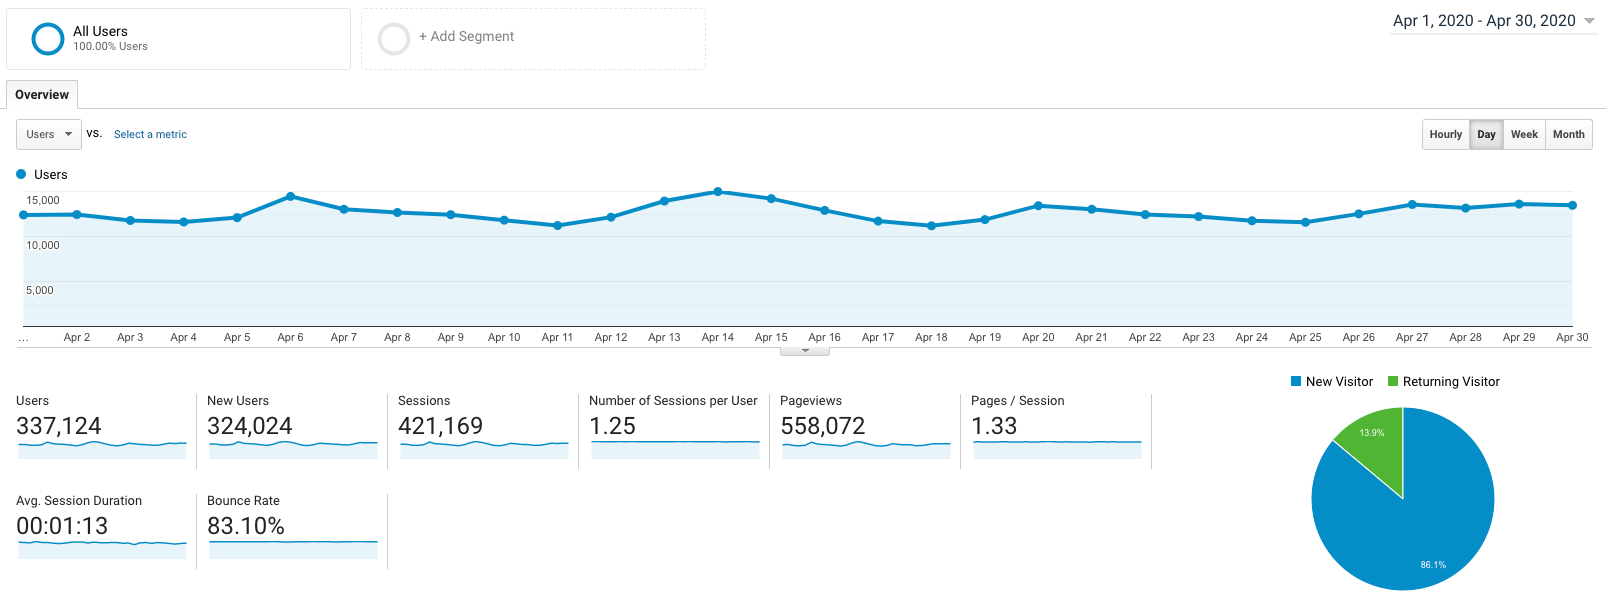 Google Analytics Screenshot Blog Income Report April 2020 Ryan Robinson